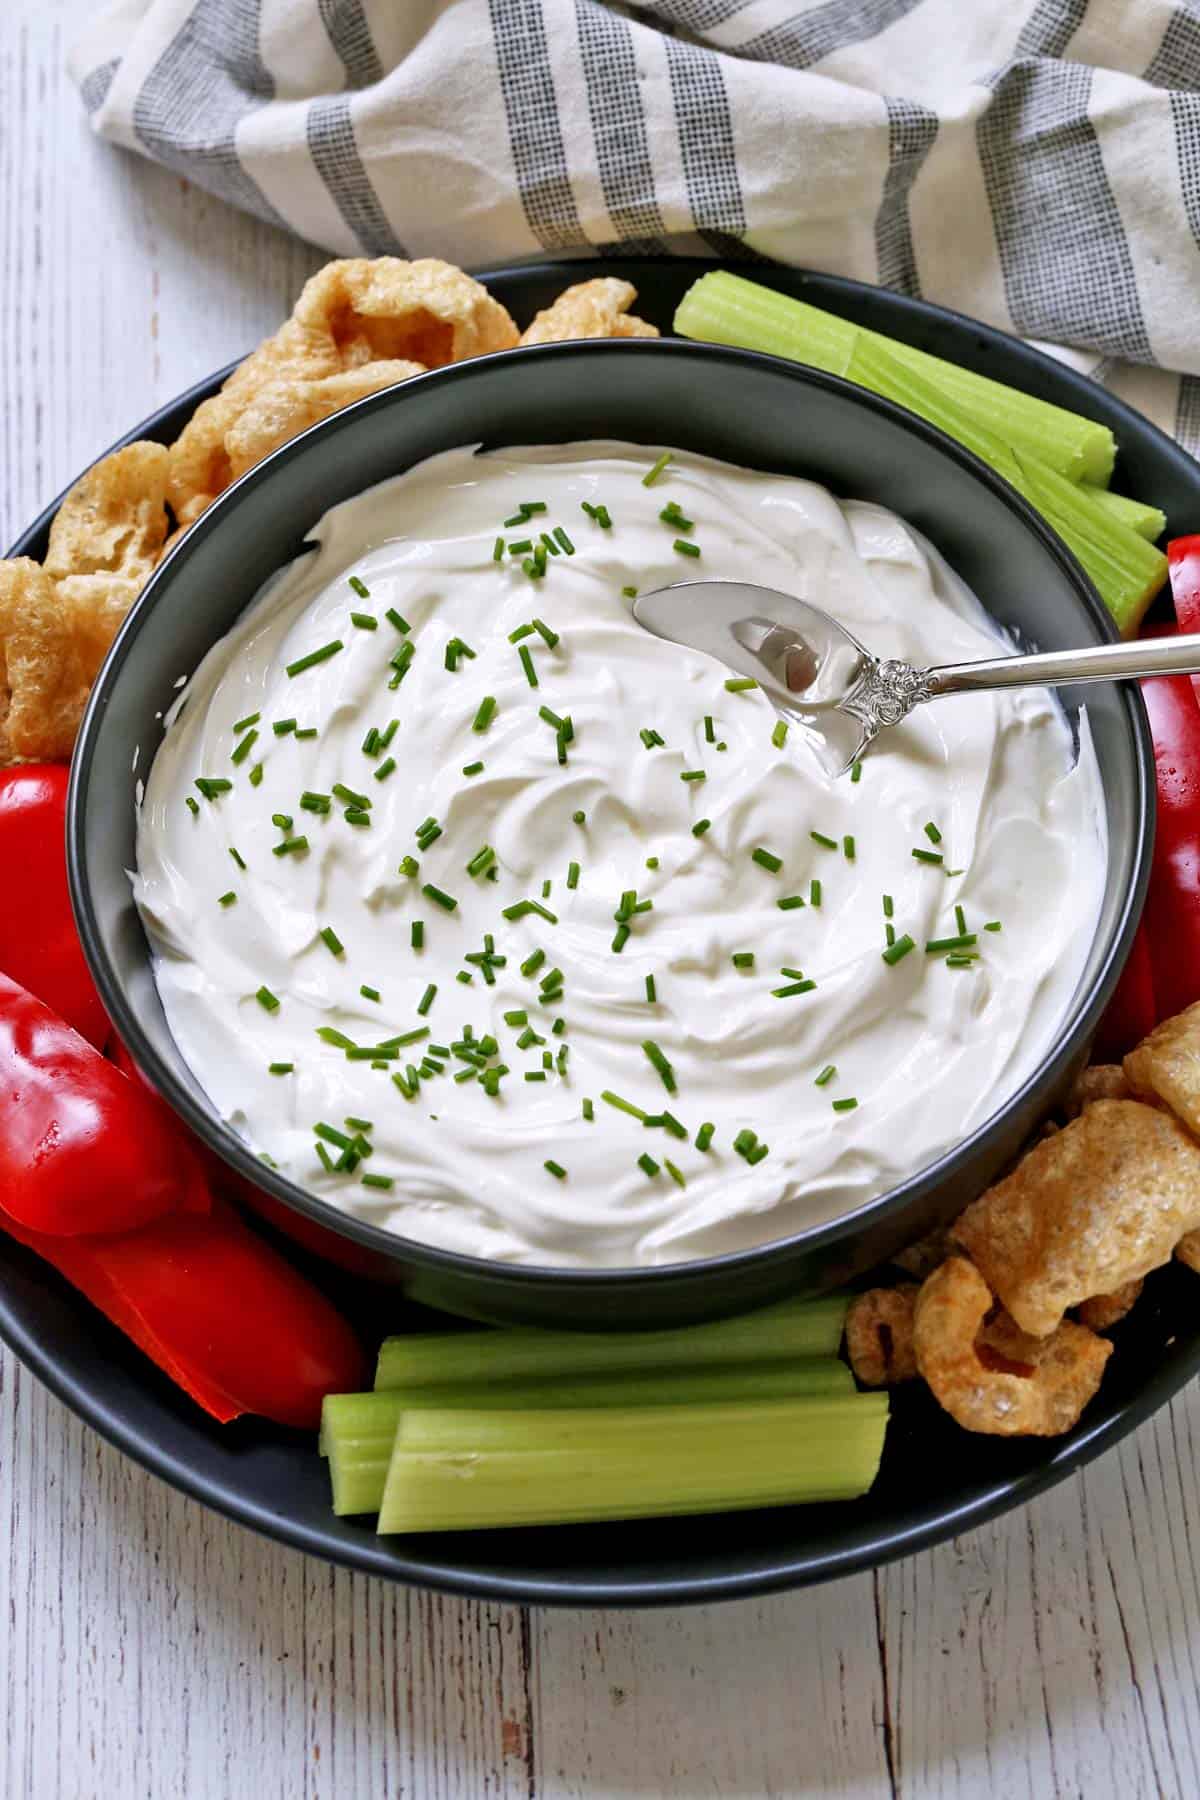 Greek yogurt dip is served with veggies and pork rinds.